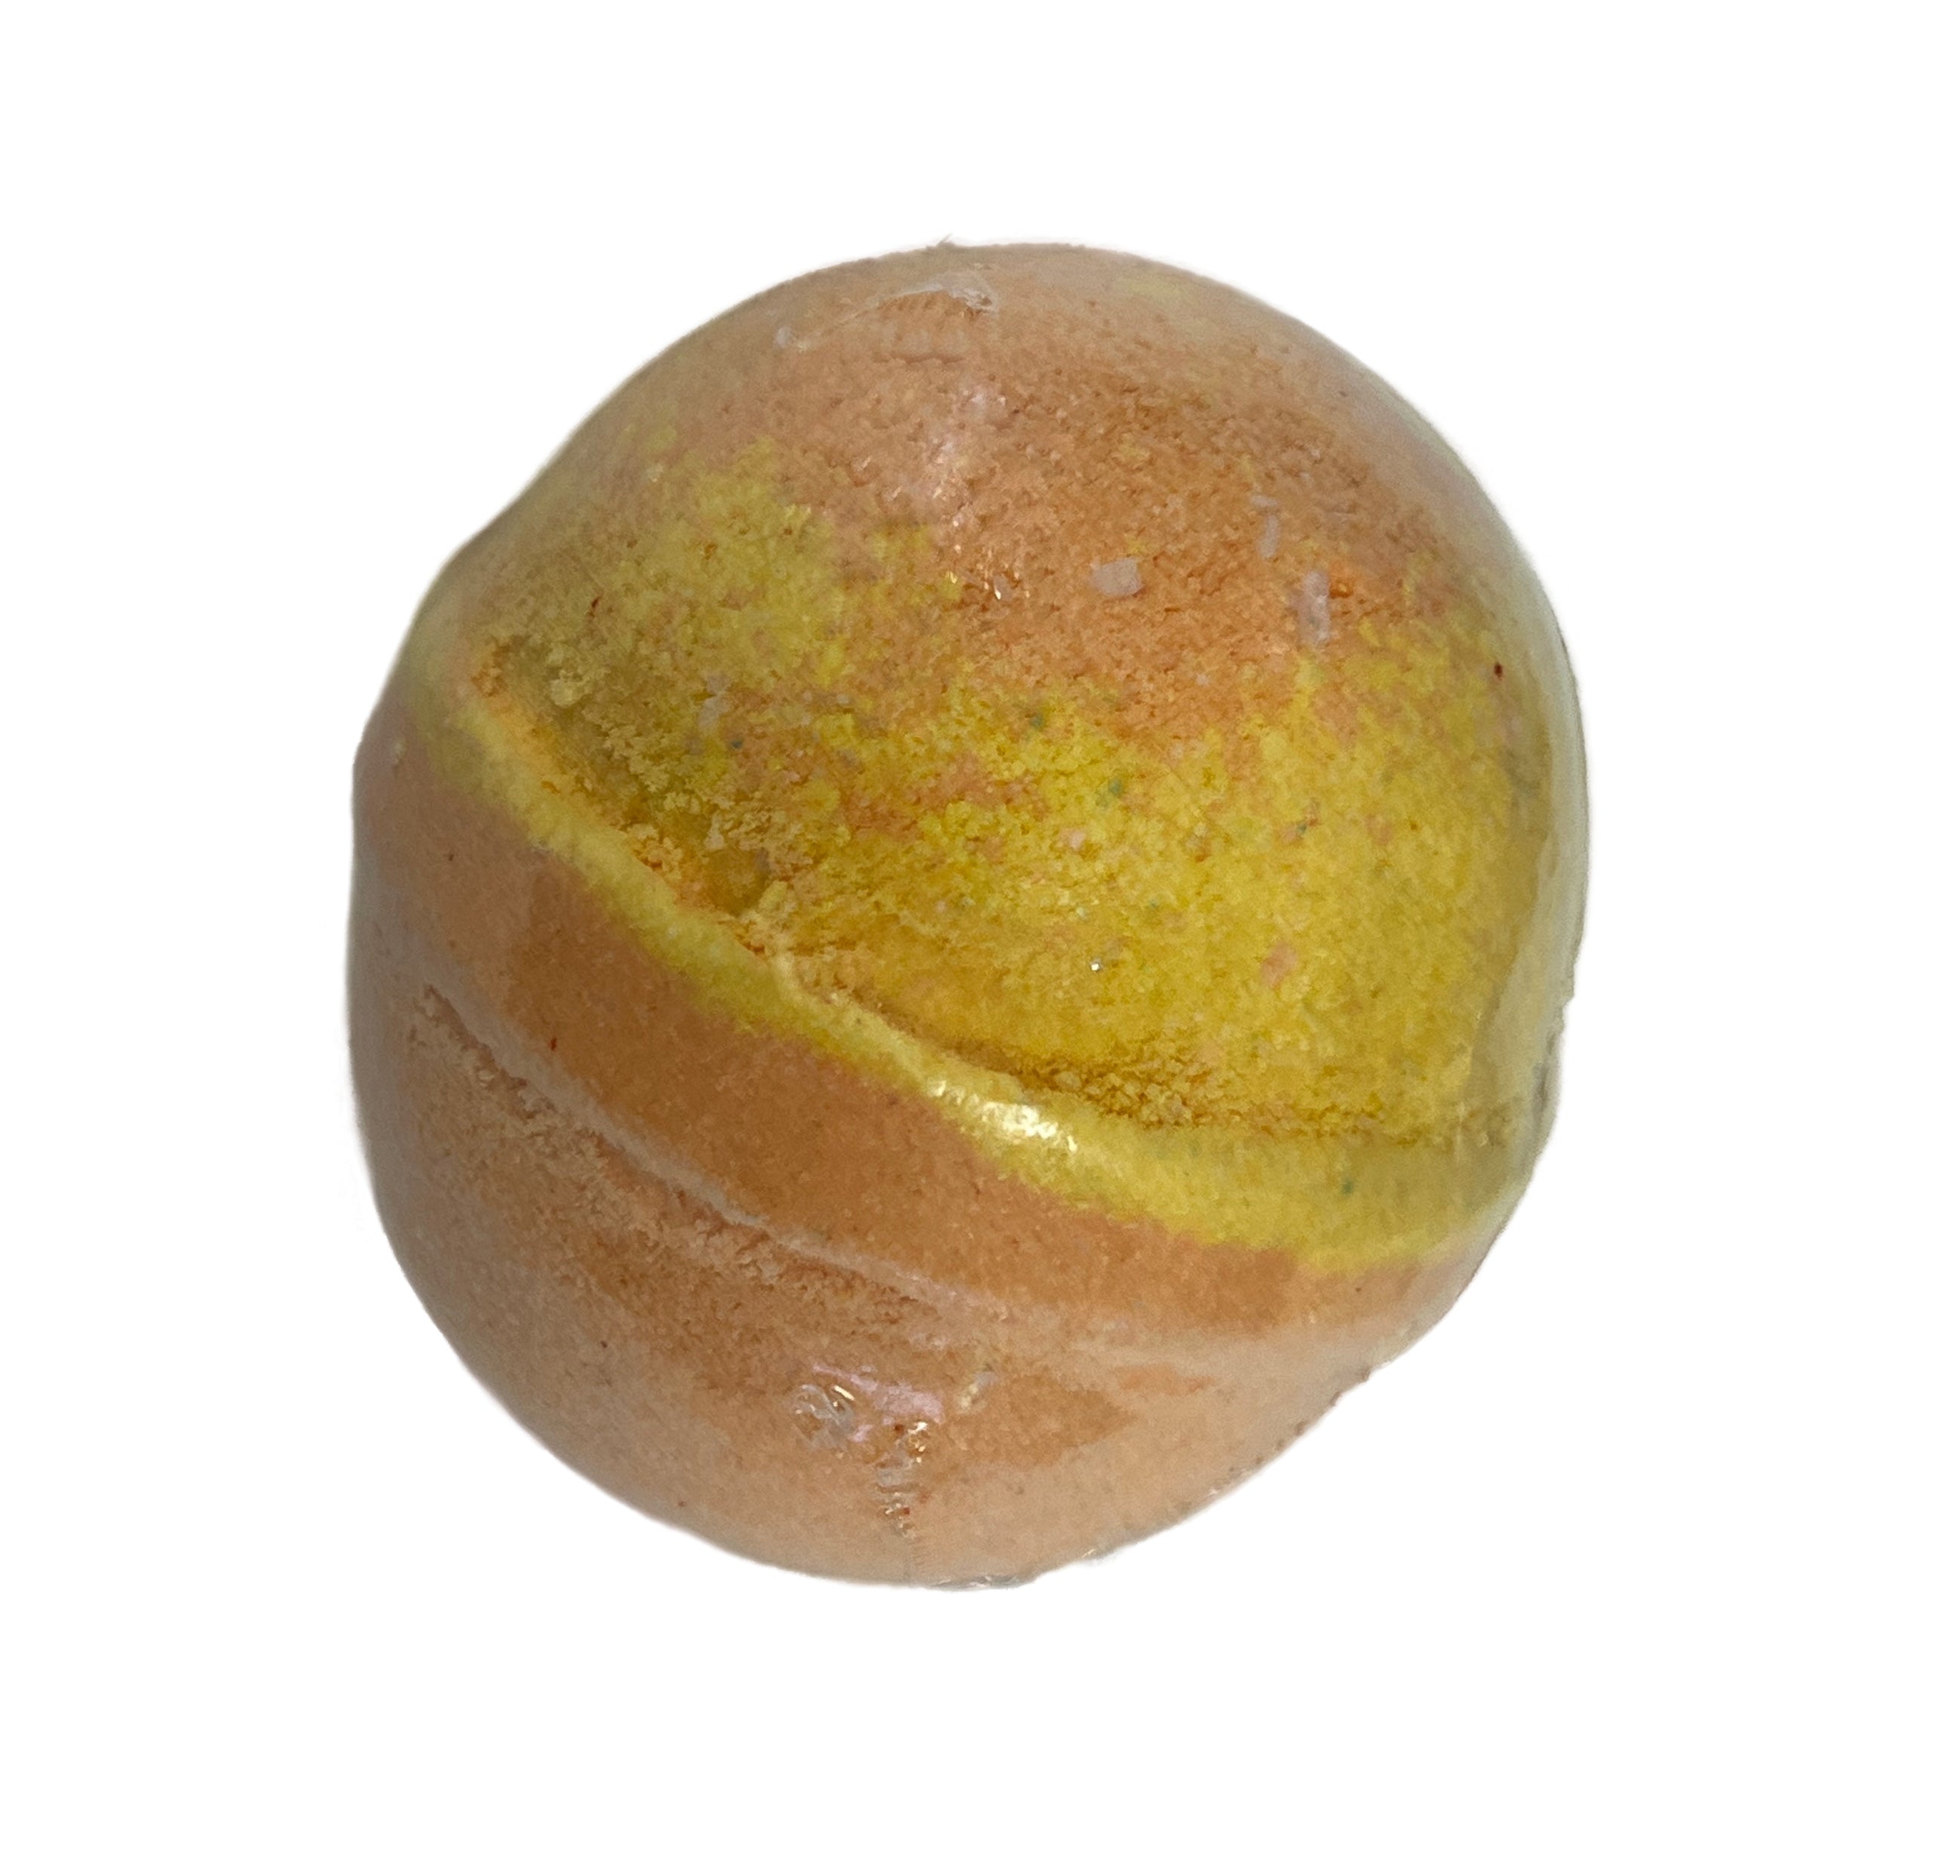 Baseball size bath bomb orange and yellow Magic potion 